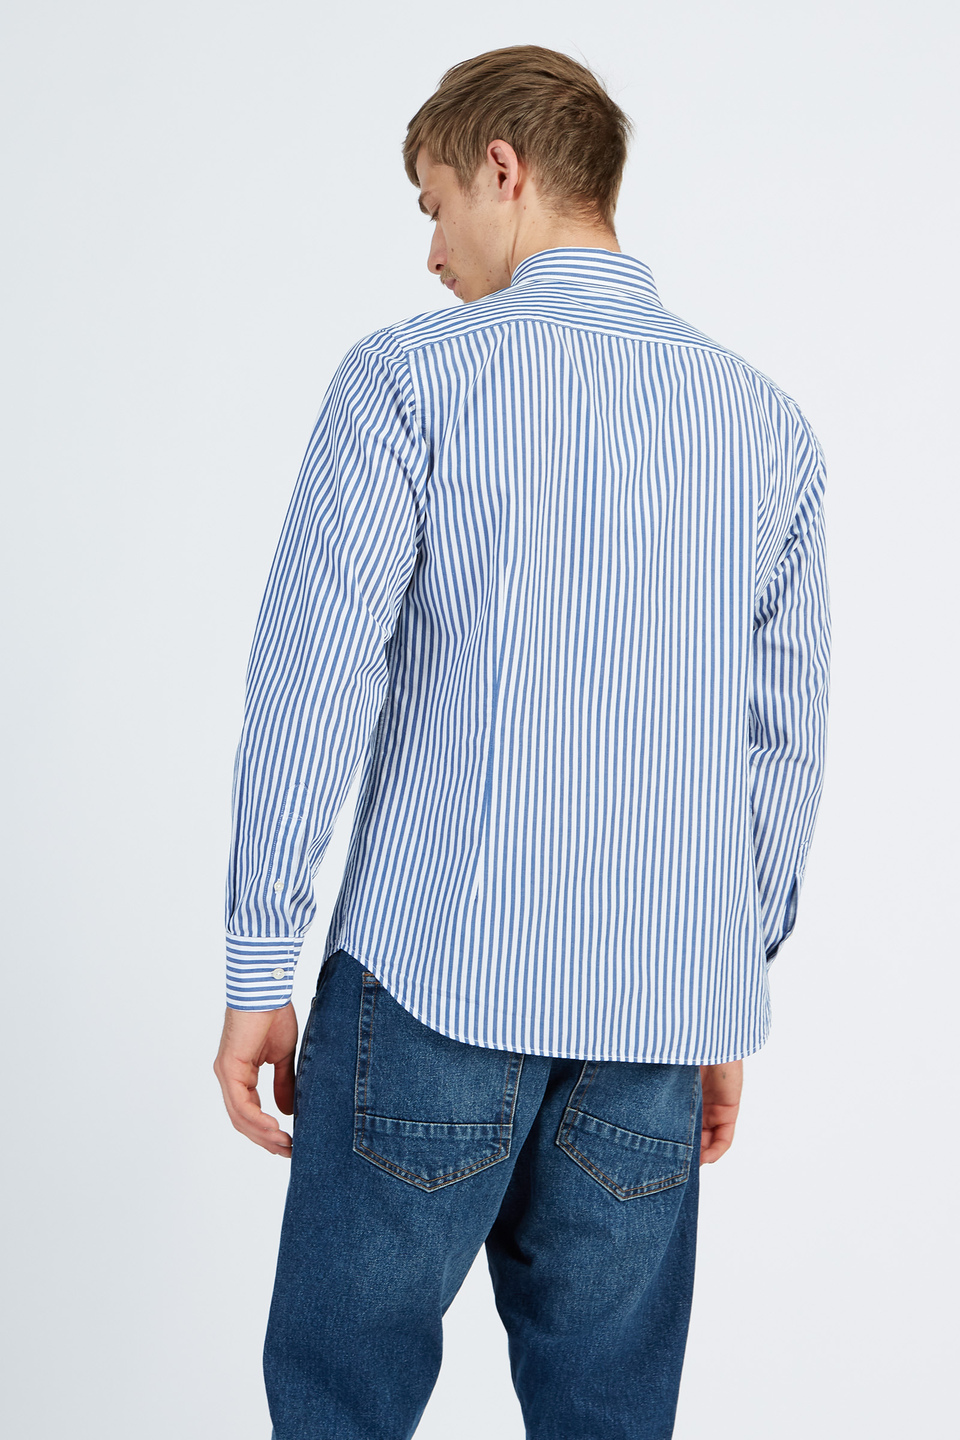 Herren-Langarmshirt aus 100% Baumwolle | La Martina - Official Online Shop